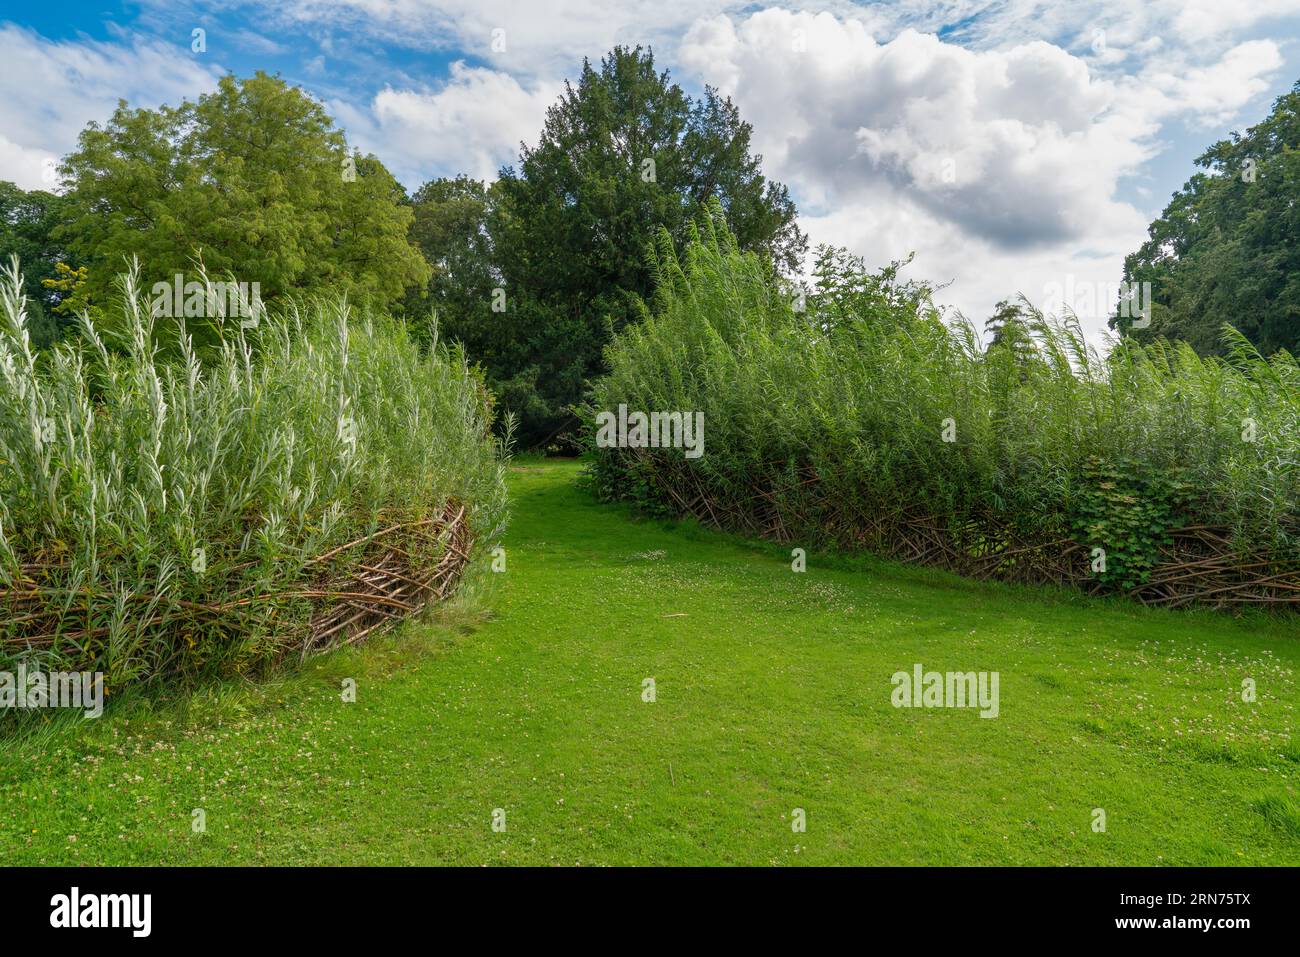 Grünes Gras und Bäume im belgischen Botanischen Garten in Meise (Pachthof in de nationale Plantentuin van België in Meise), Belgien Stockfoto